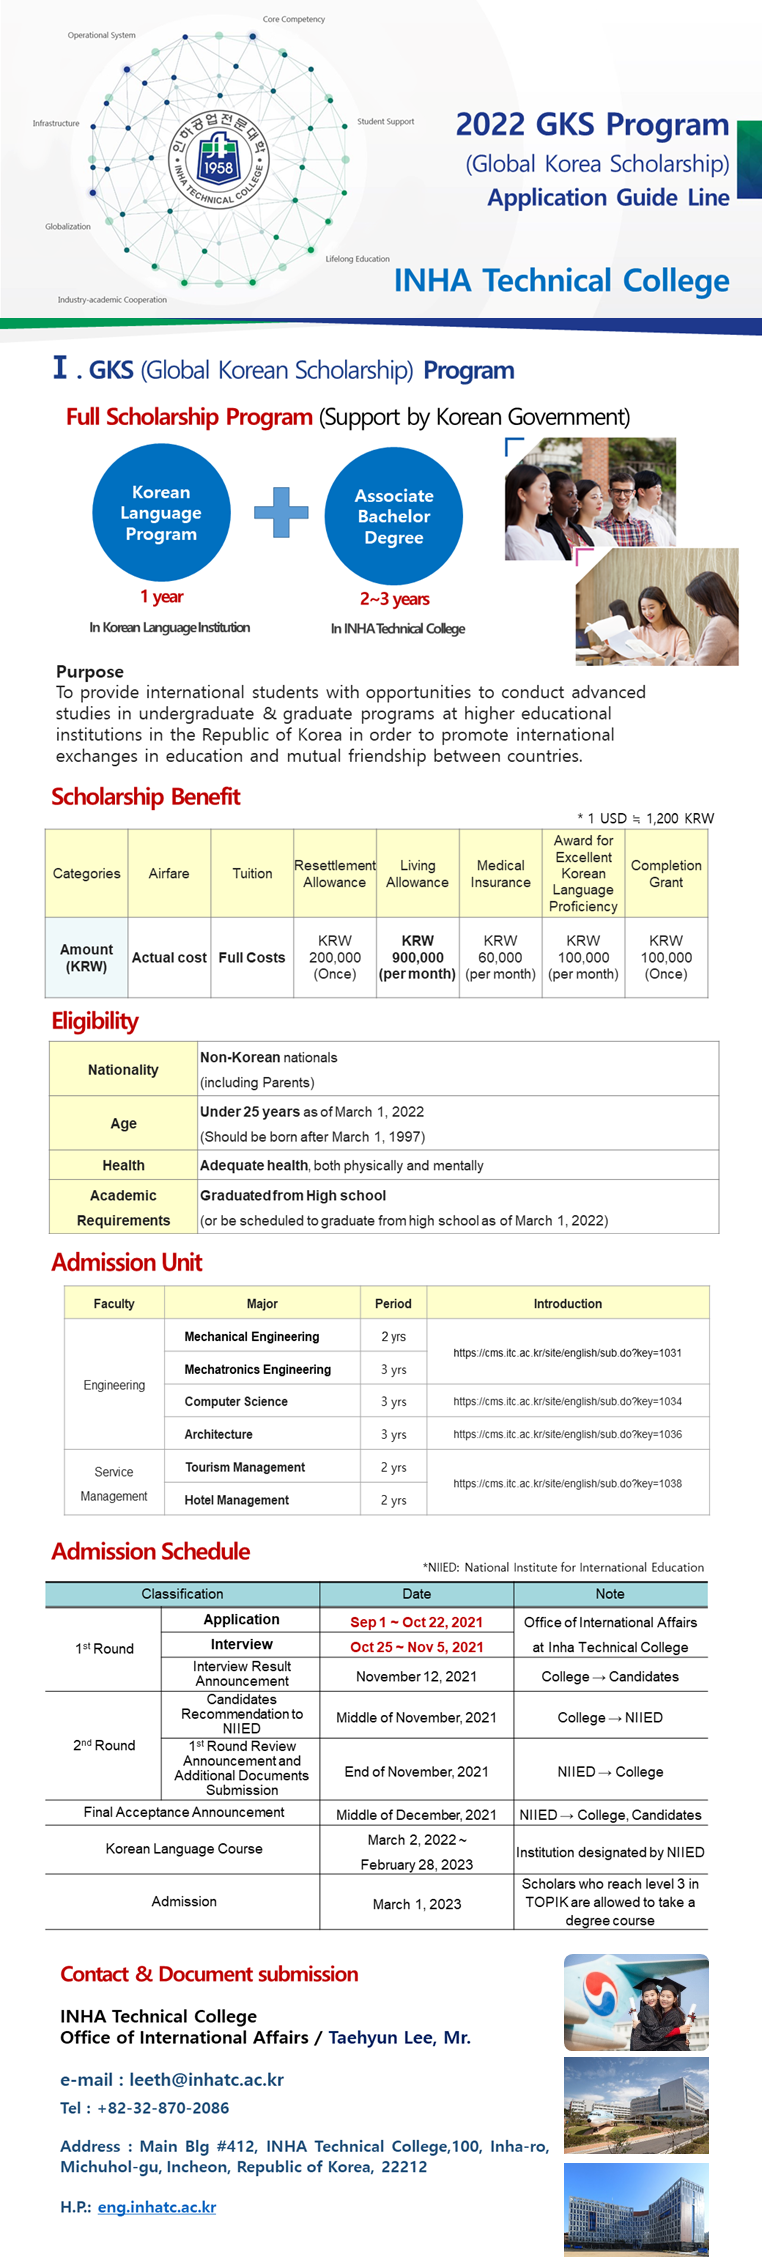 2022 GKS Program Guideline (INHA Technical College)